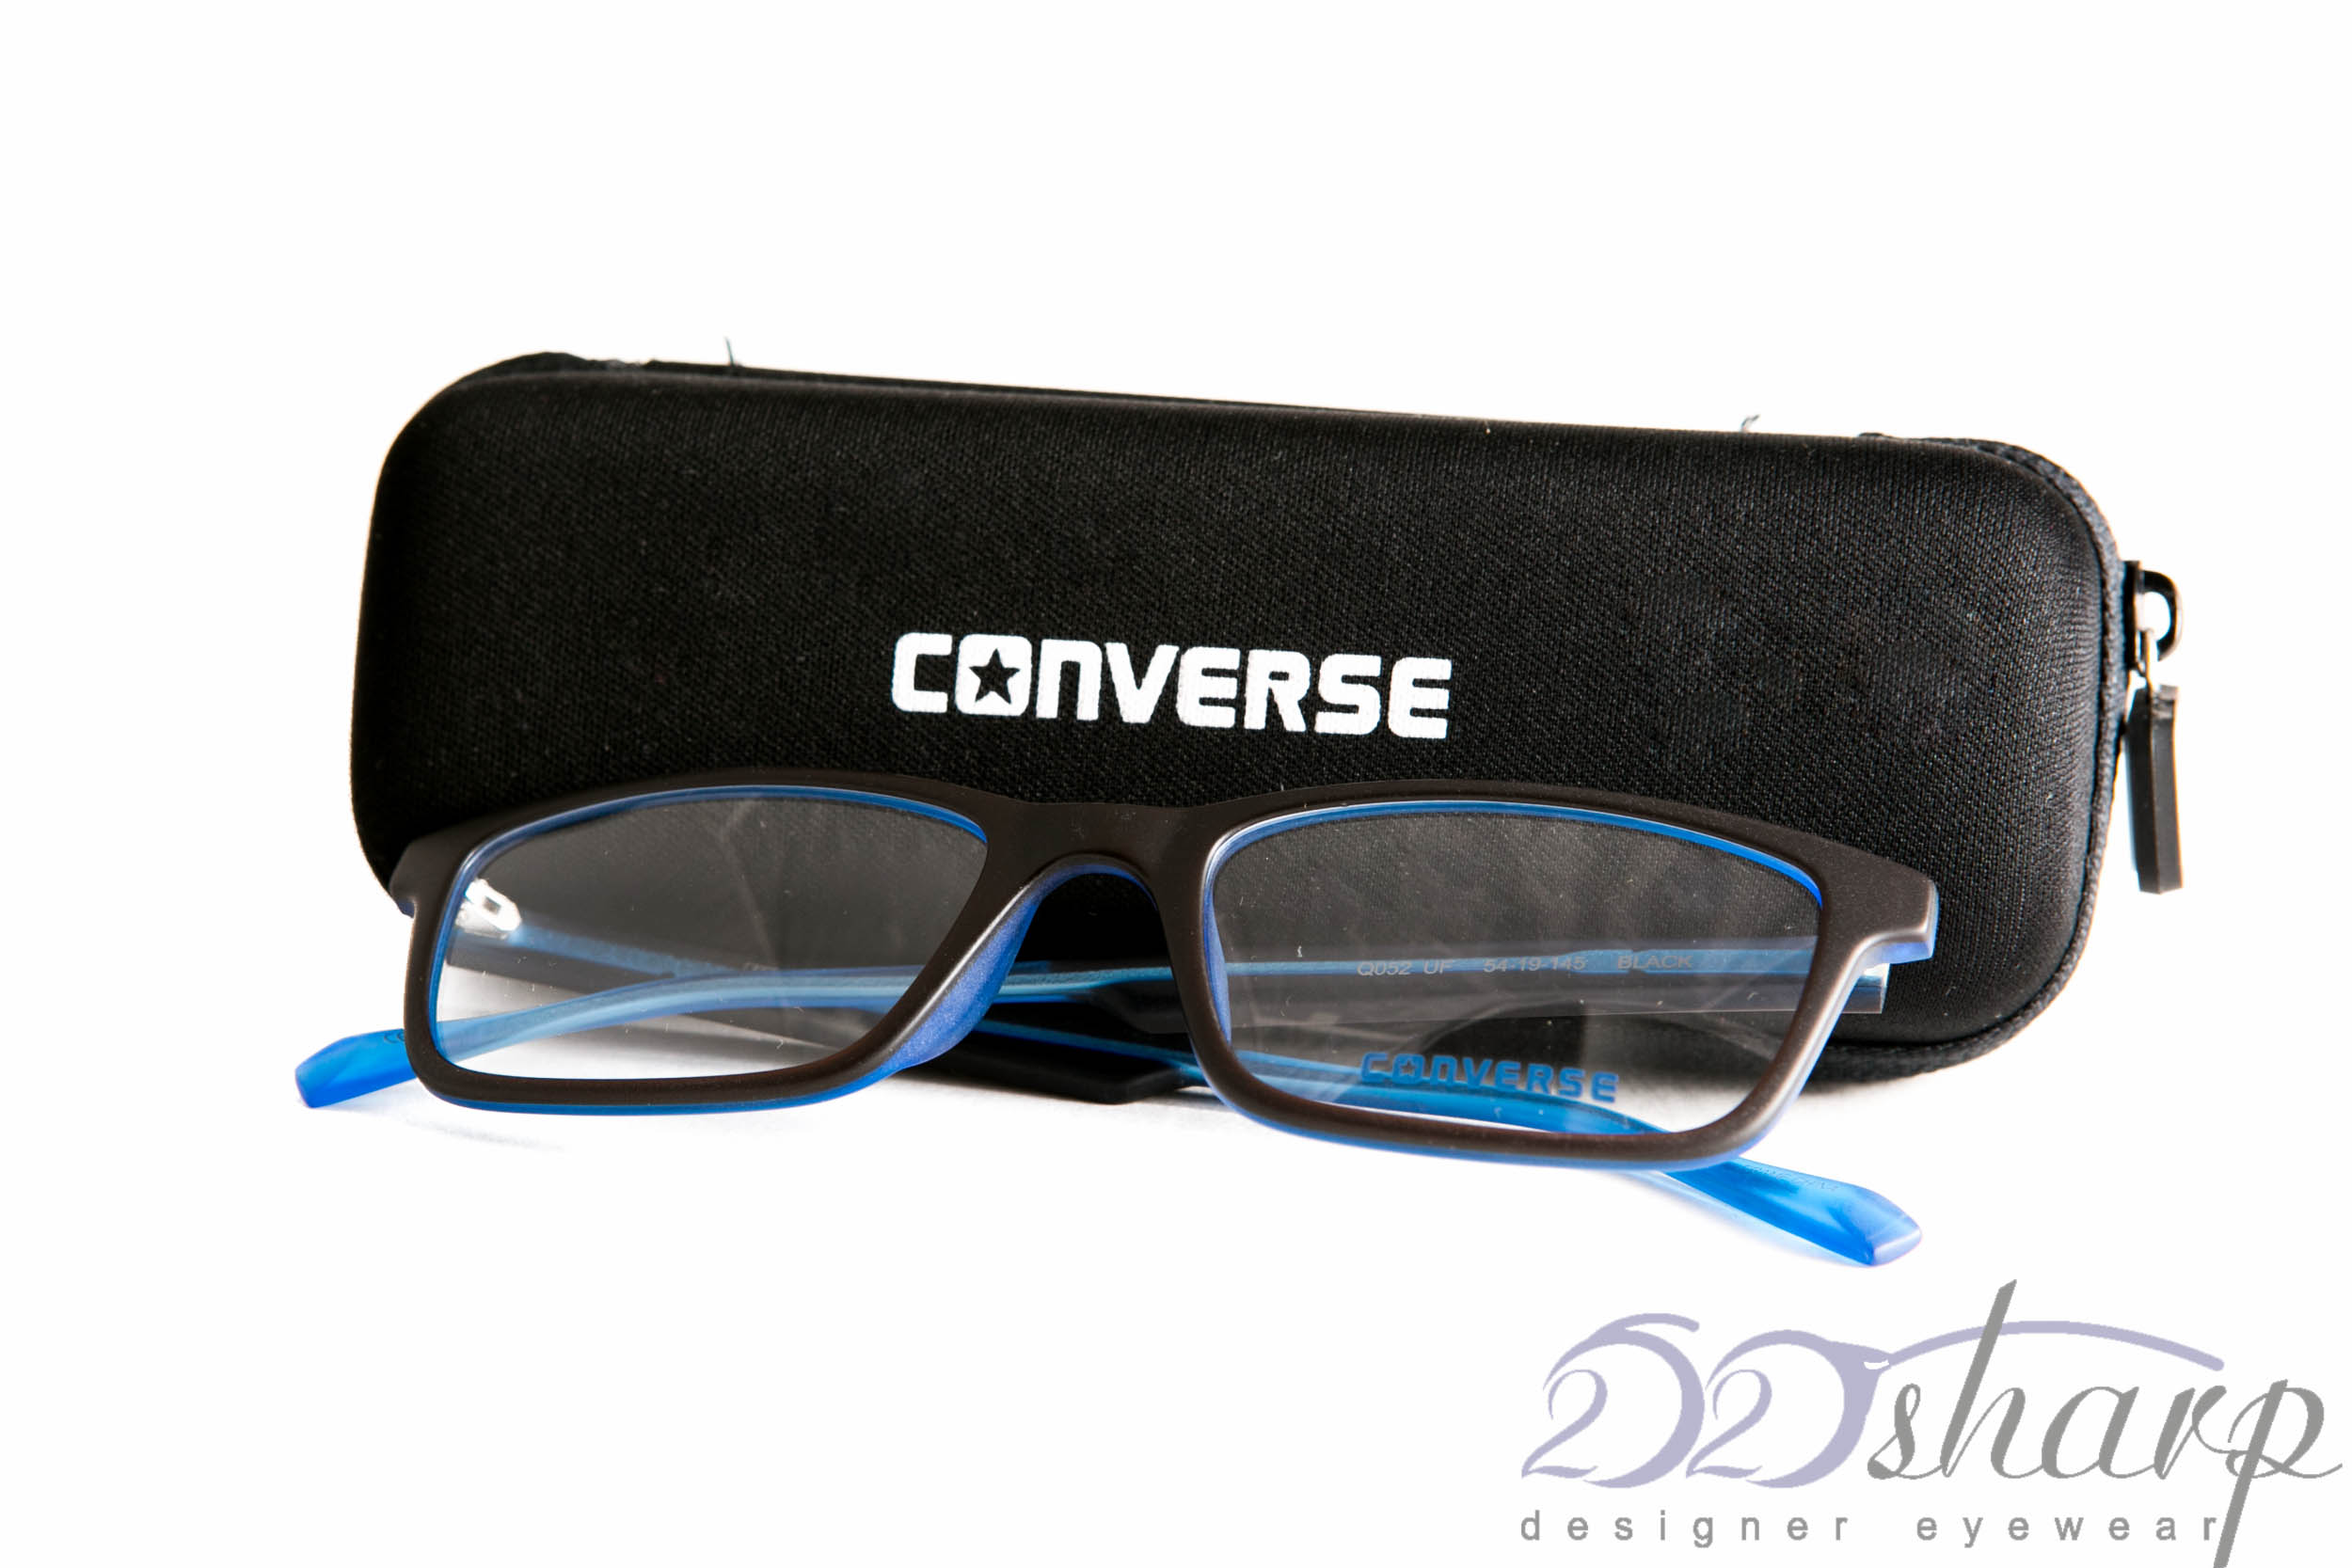 converse eyewear